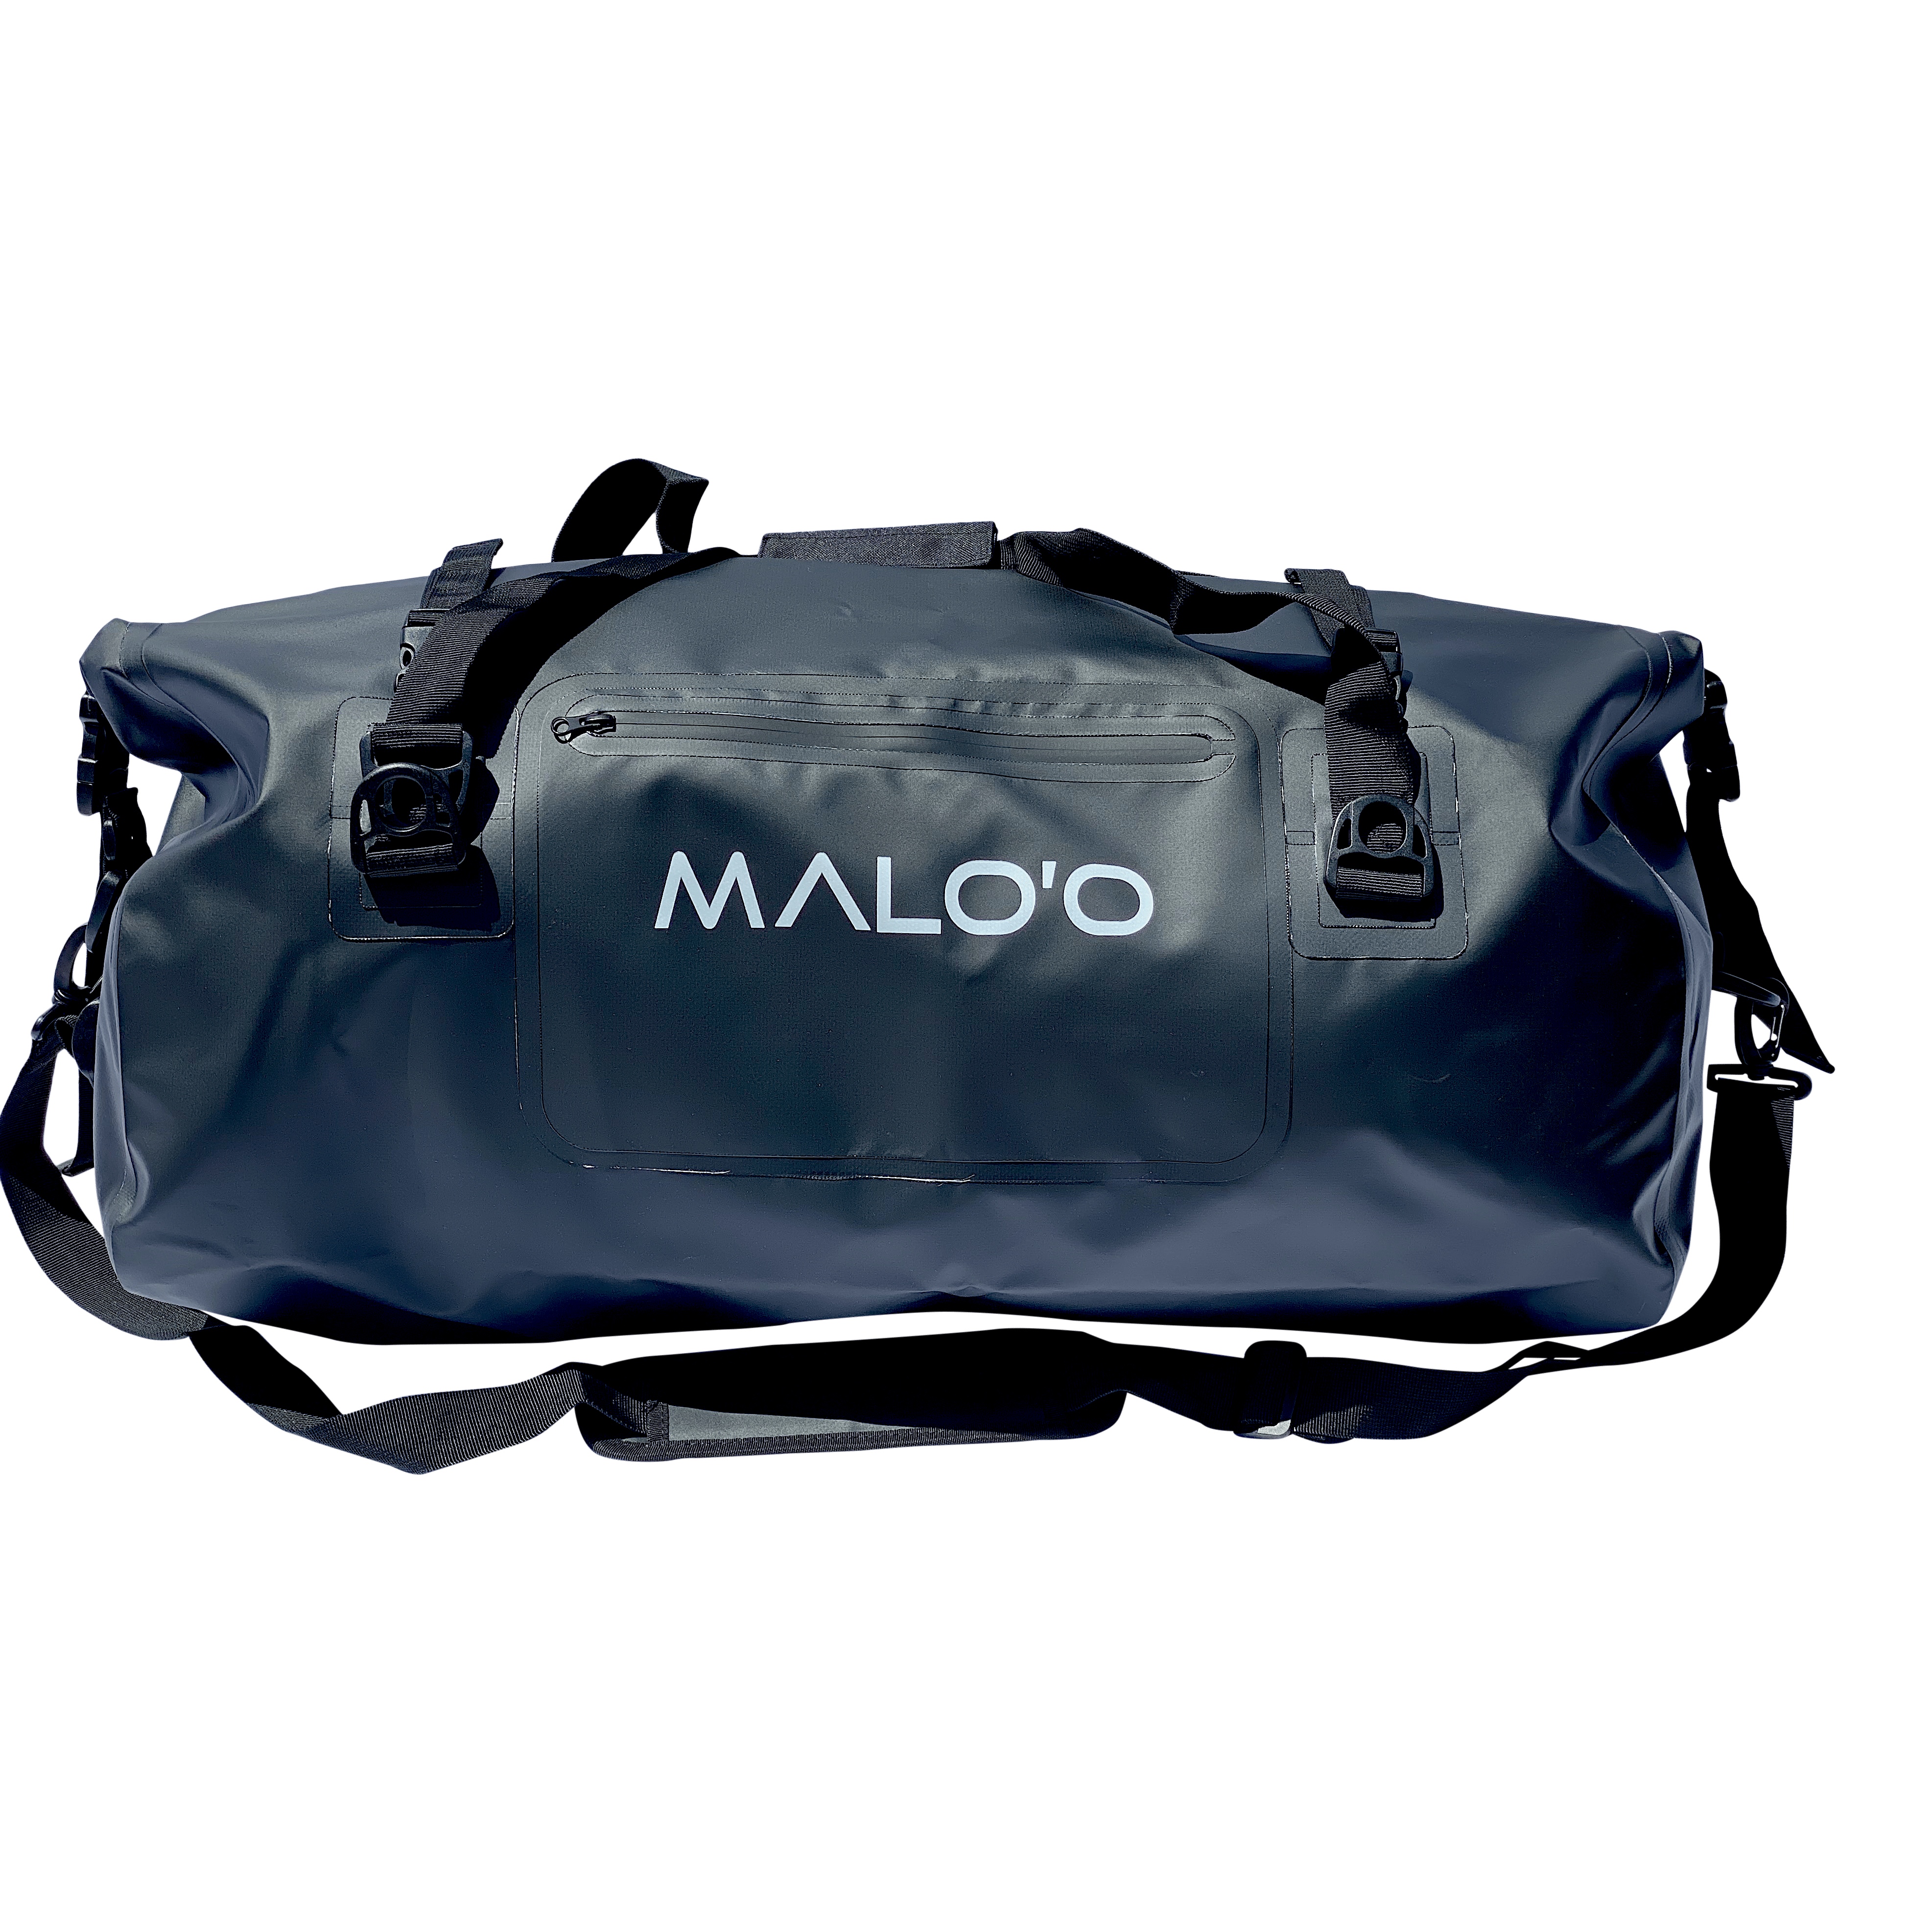 Malo\'o DryPack Roll Top Waterproof Bag